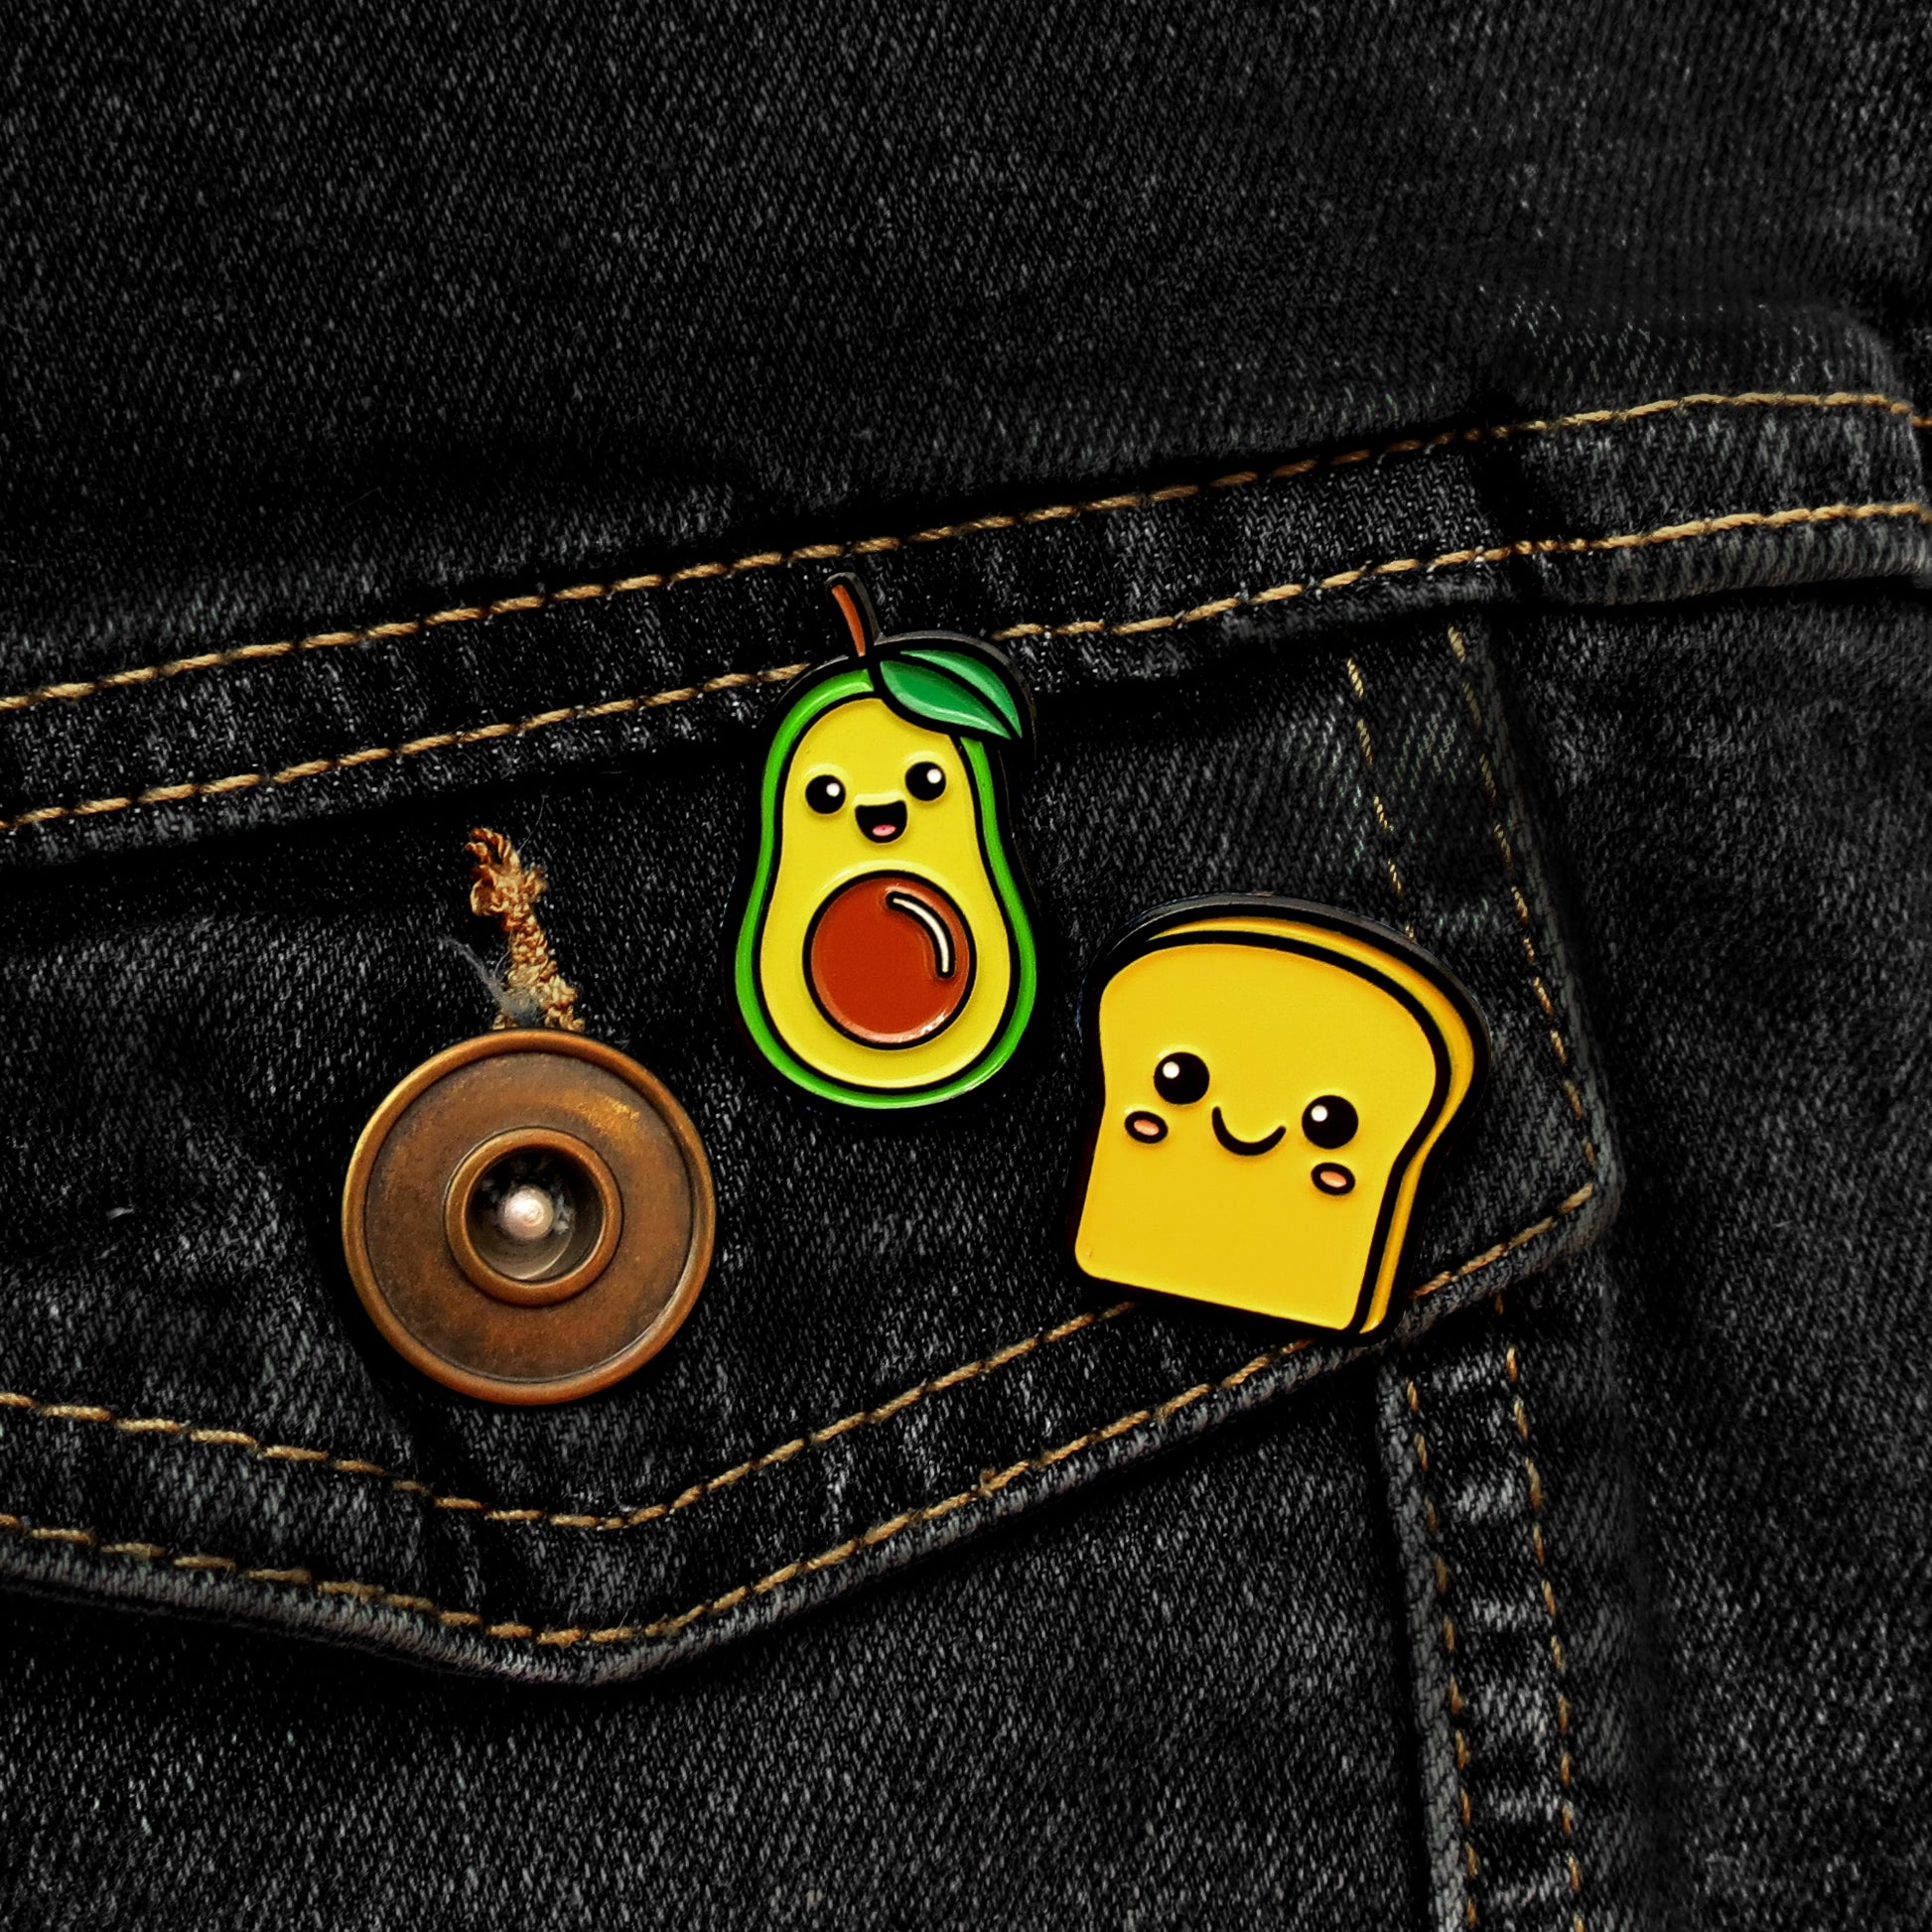 Avocado and Toast enamel pin set on black jean jacket pocket